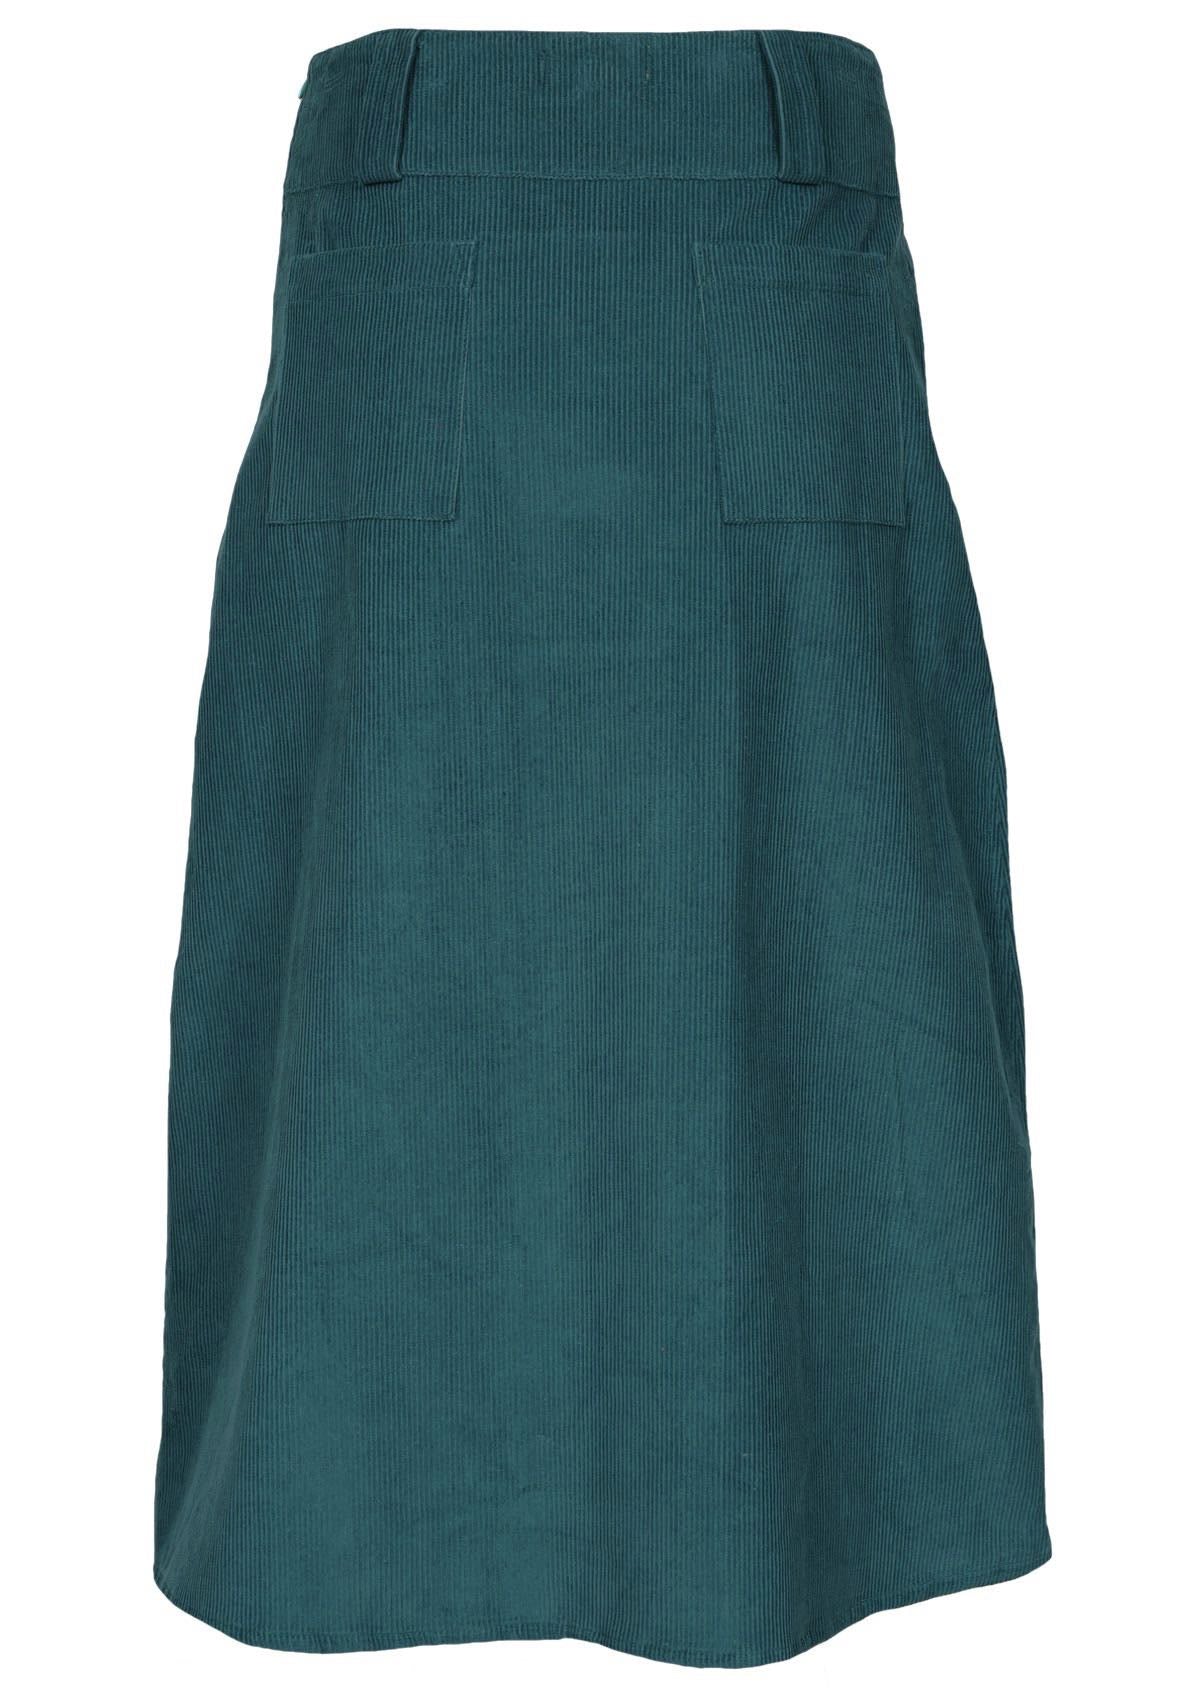 Deep teal shin length skirt has back pockets and is 100% cotton. 